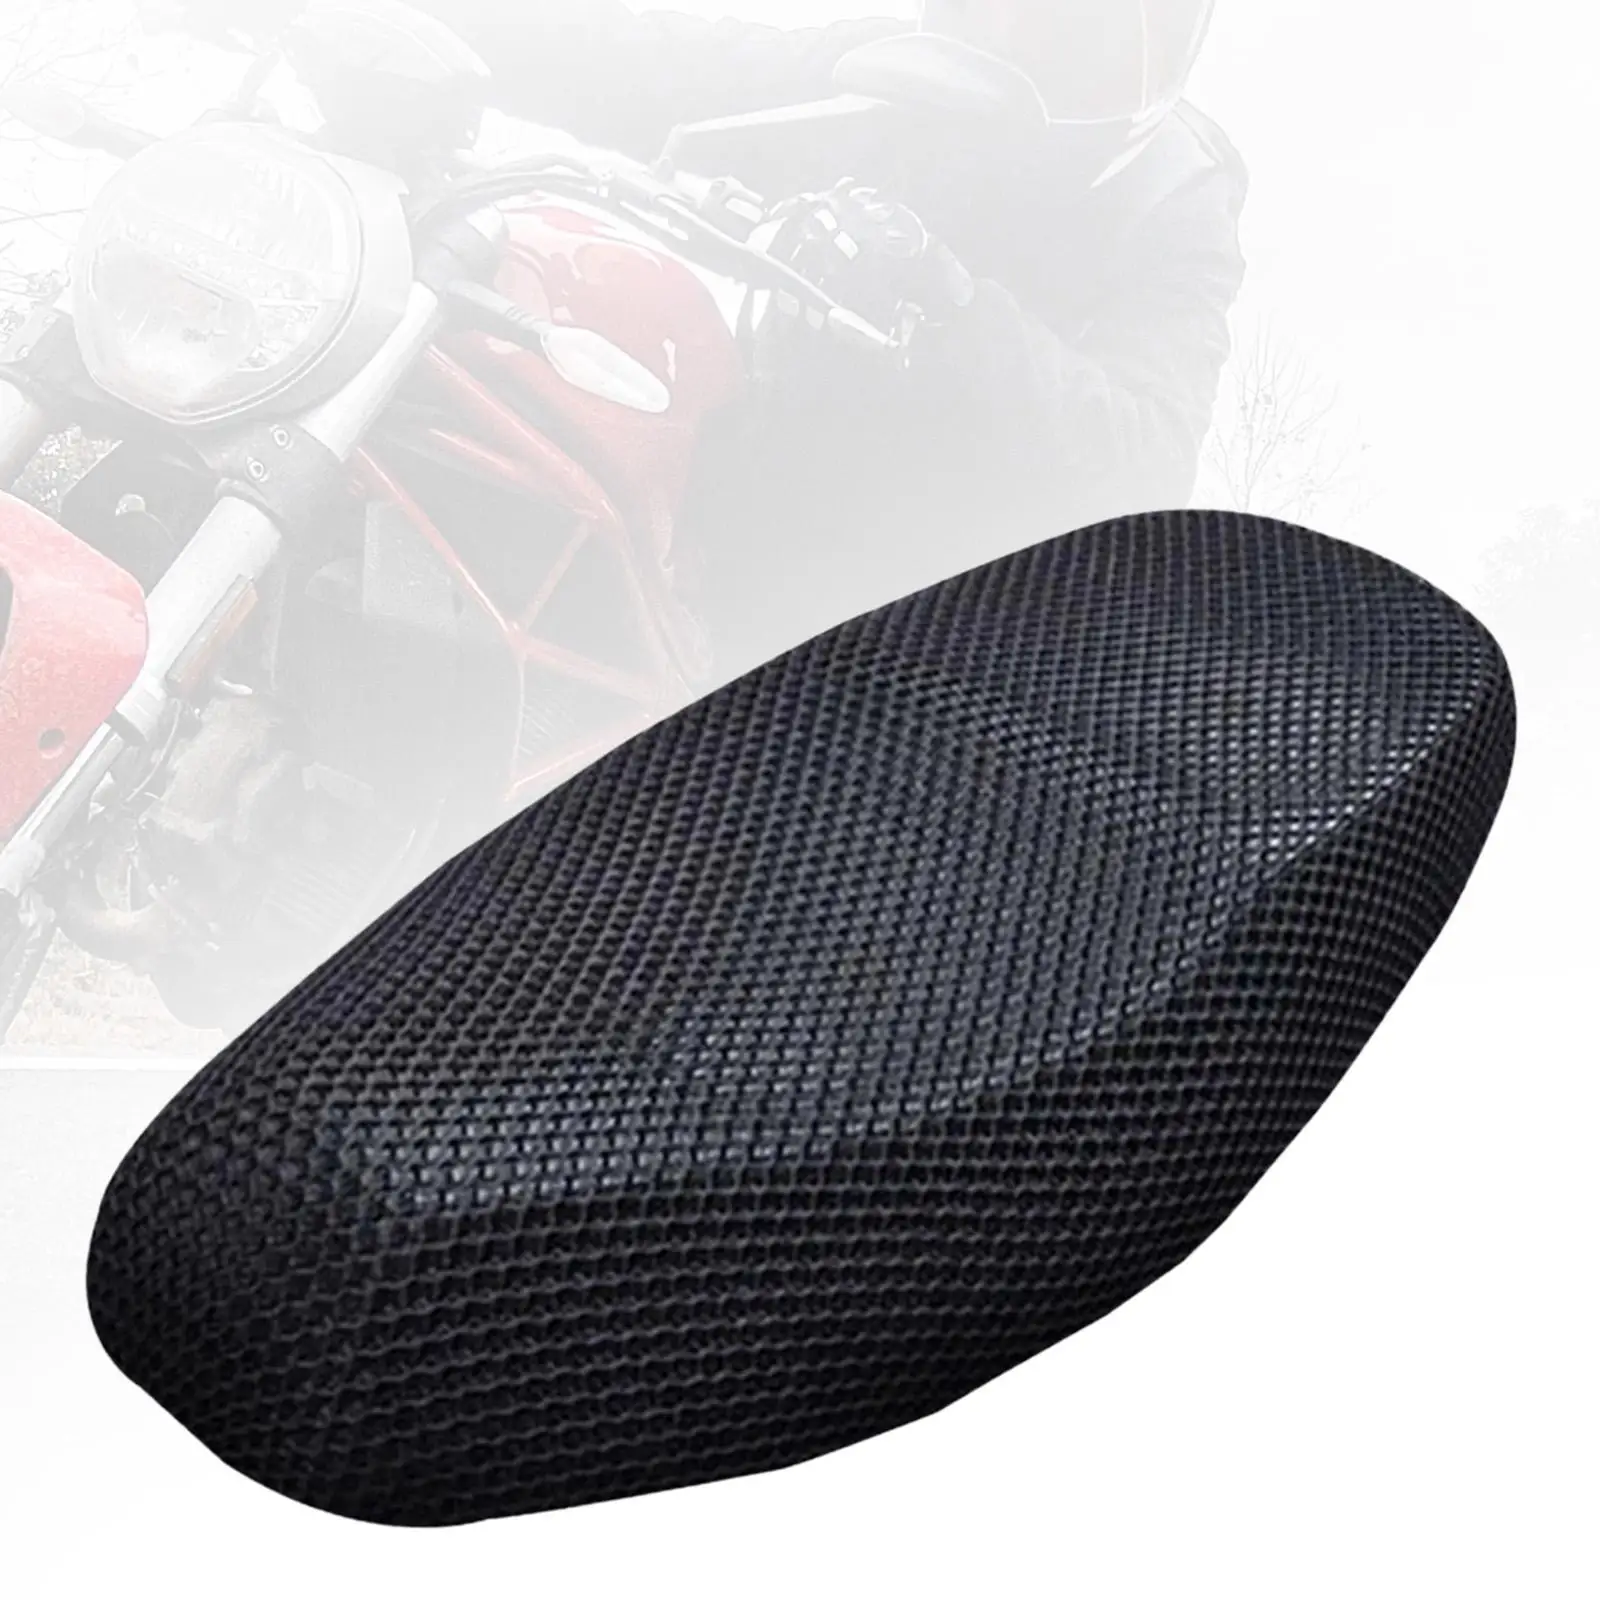 Motorcycle Seat Mesh Cover Comfort Anti Slip Heat Resistance Replace Universal